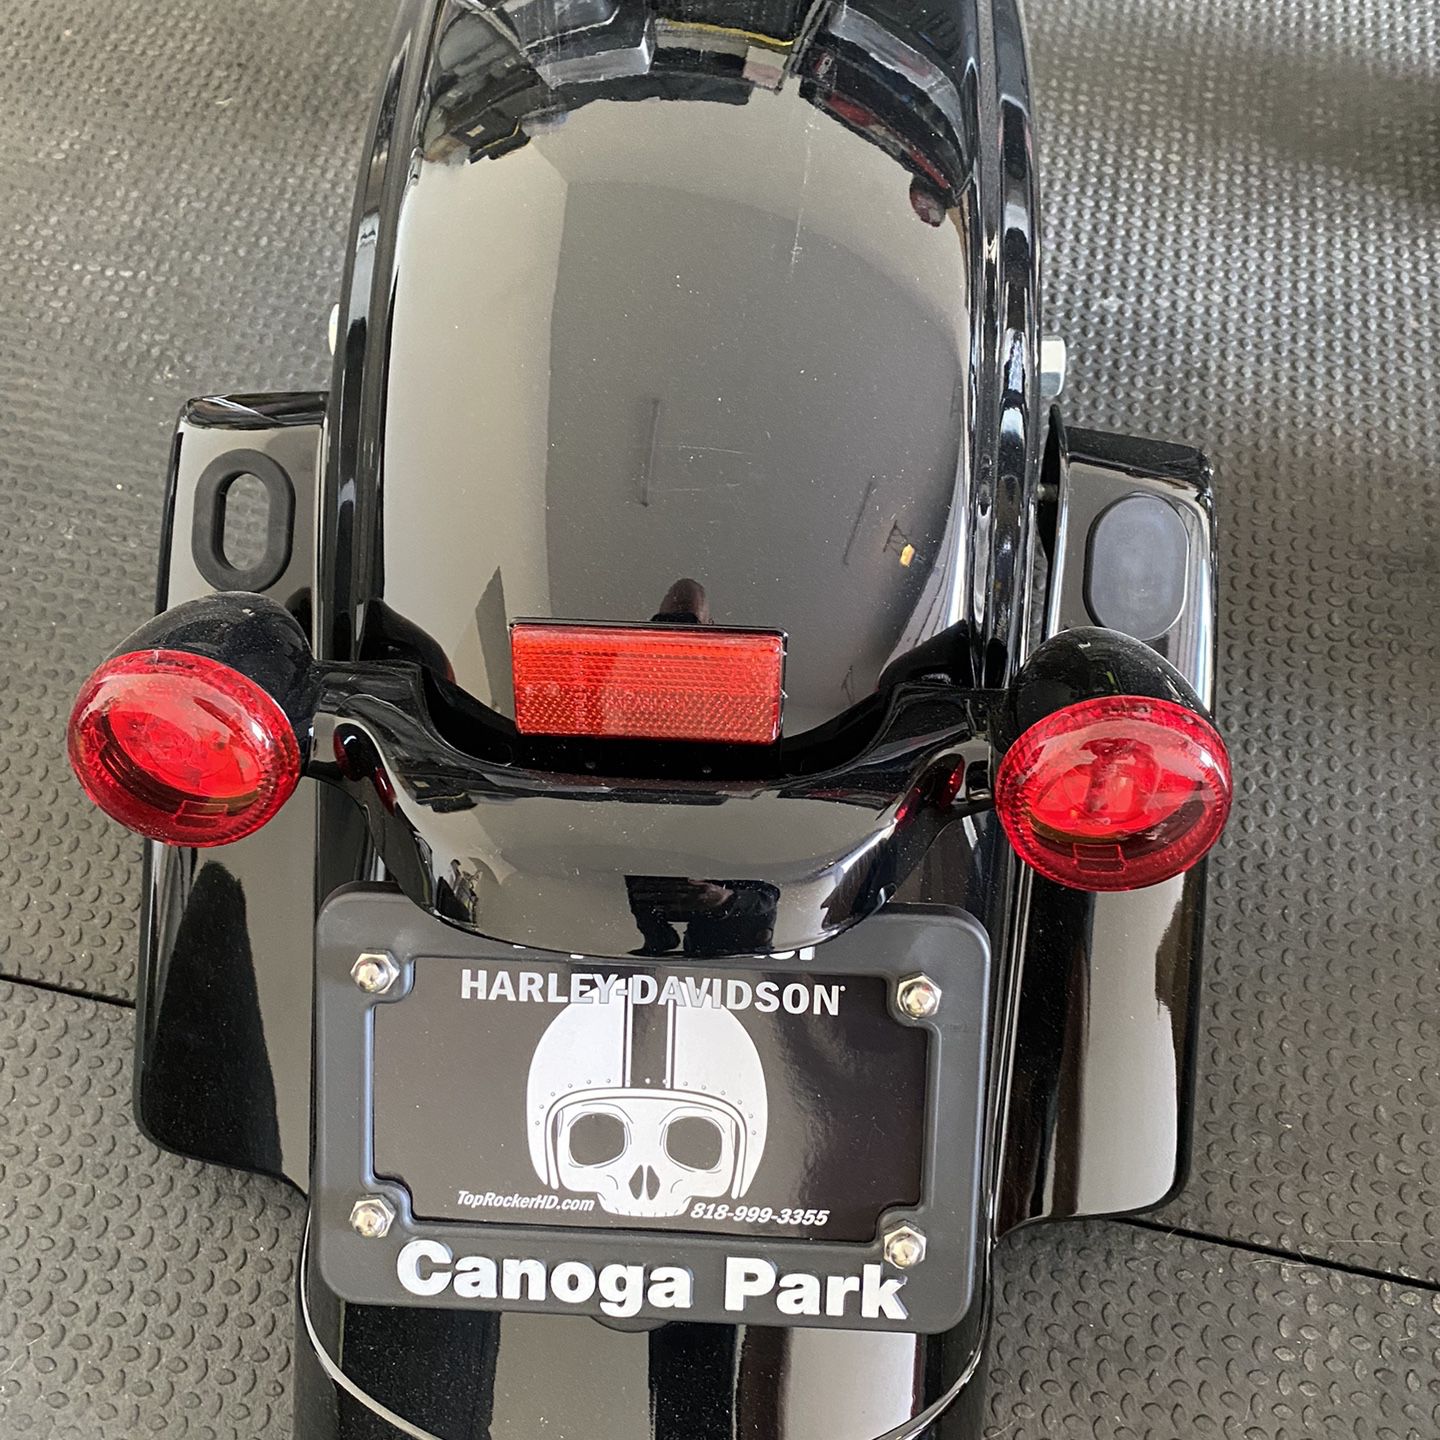 2019 Harley Davidson Street Glide Special 114 - Special Black